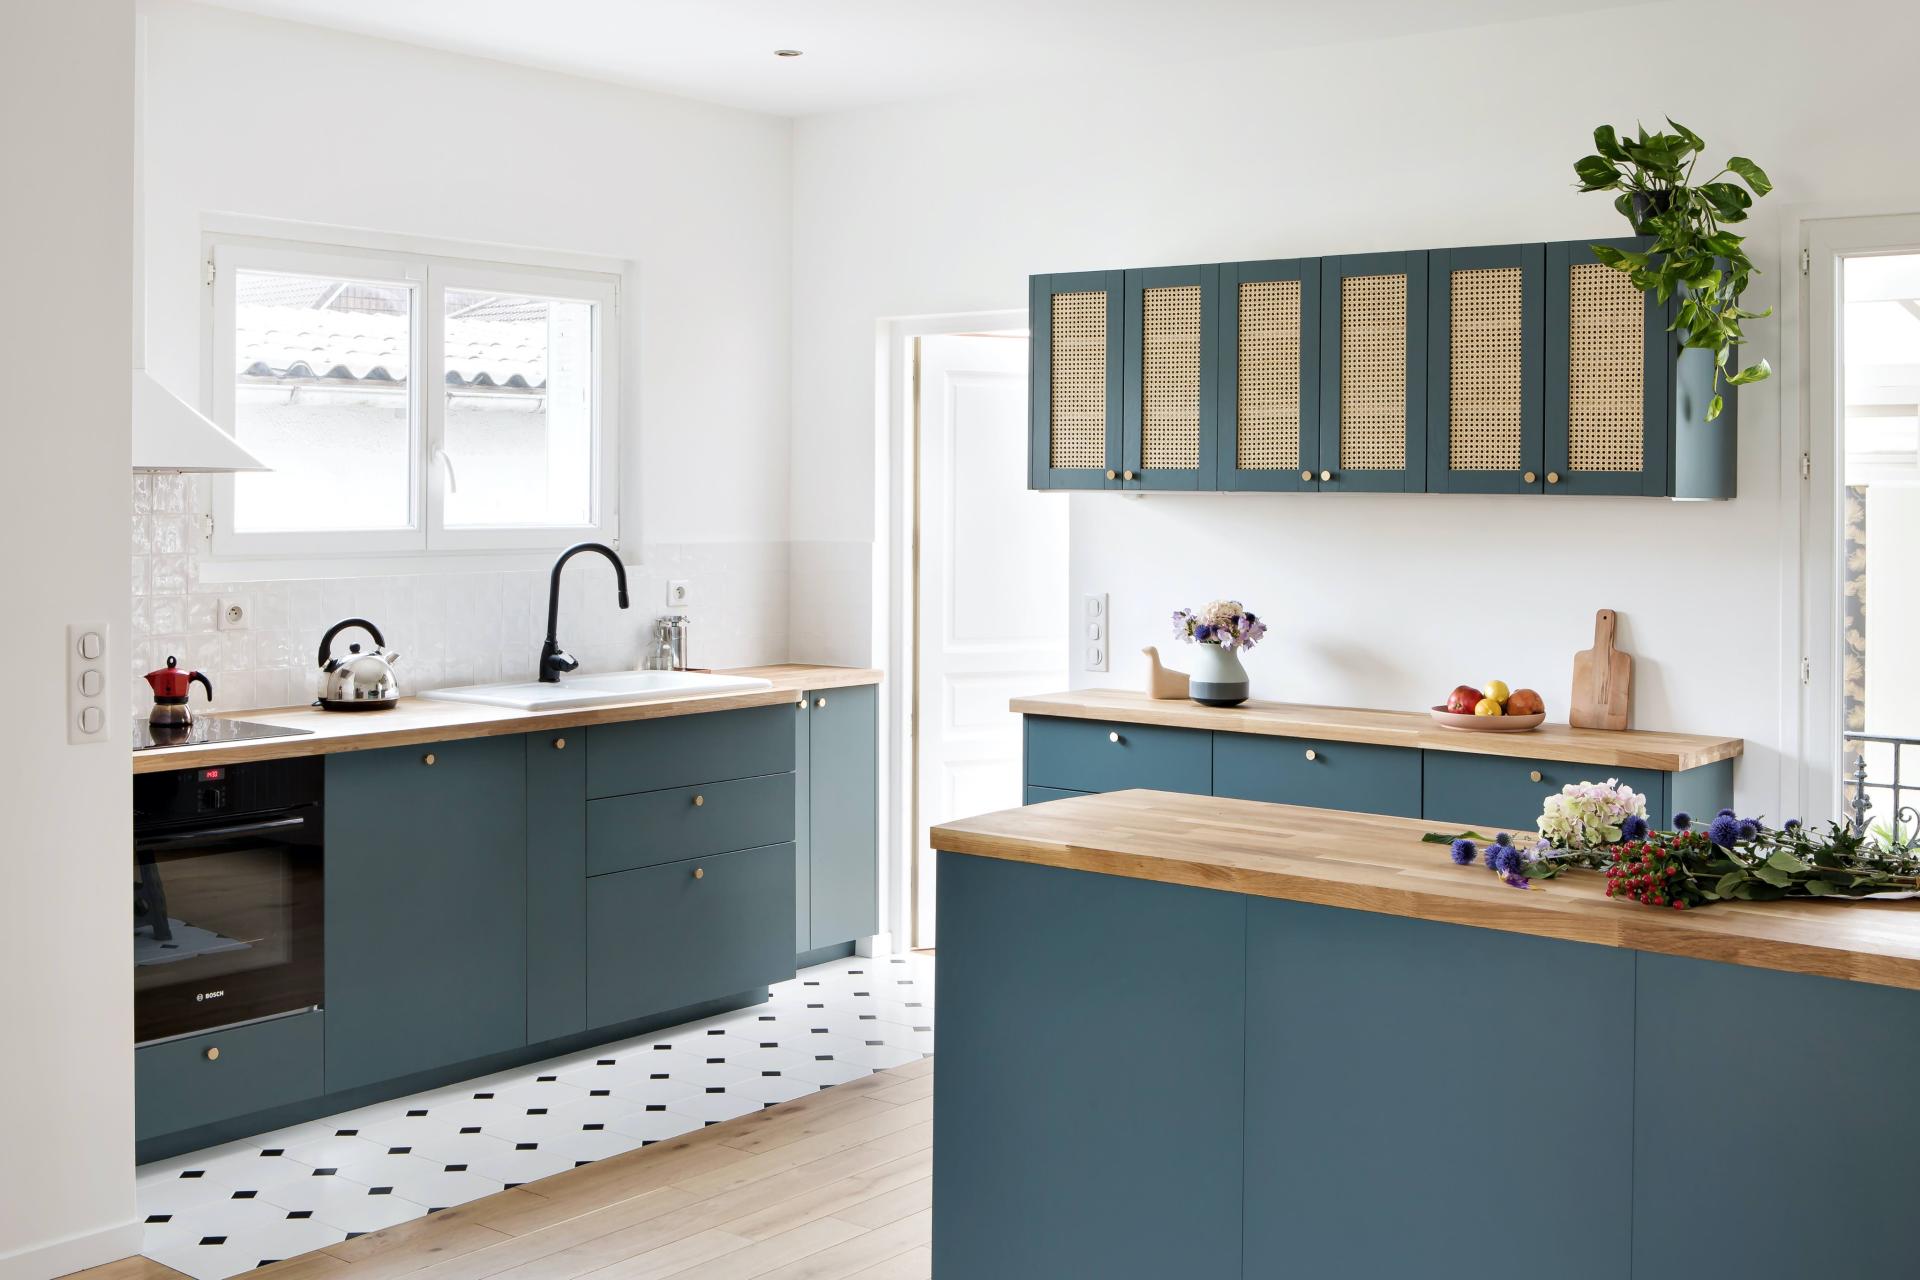 Mélanie & François' kitchen in Blue 05 - Bleu paon